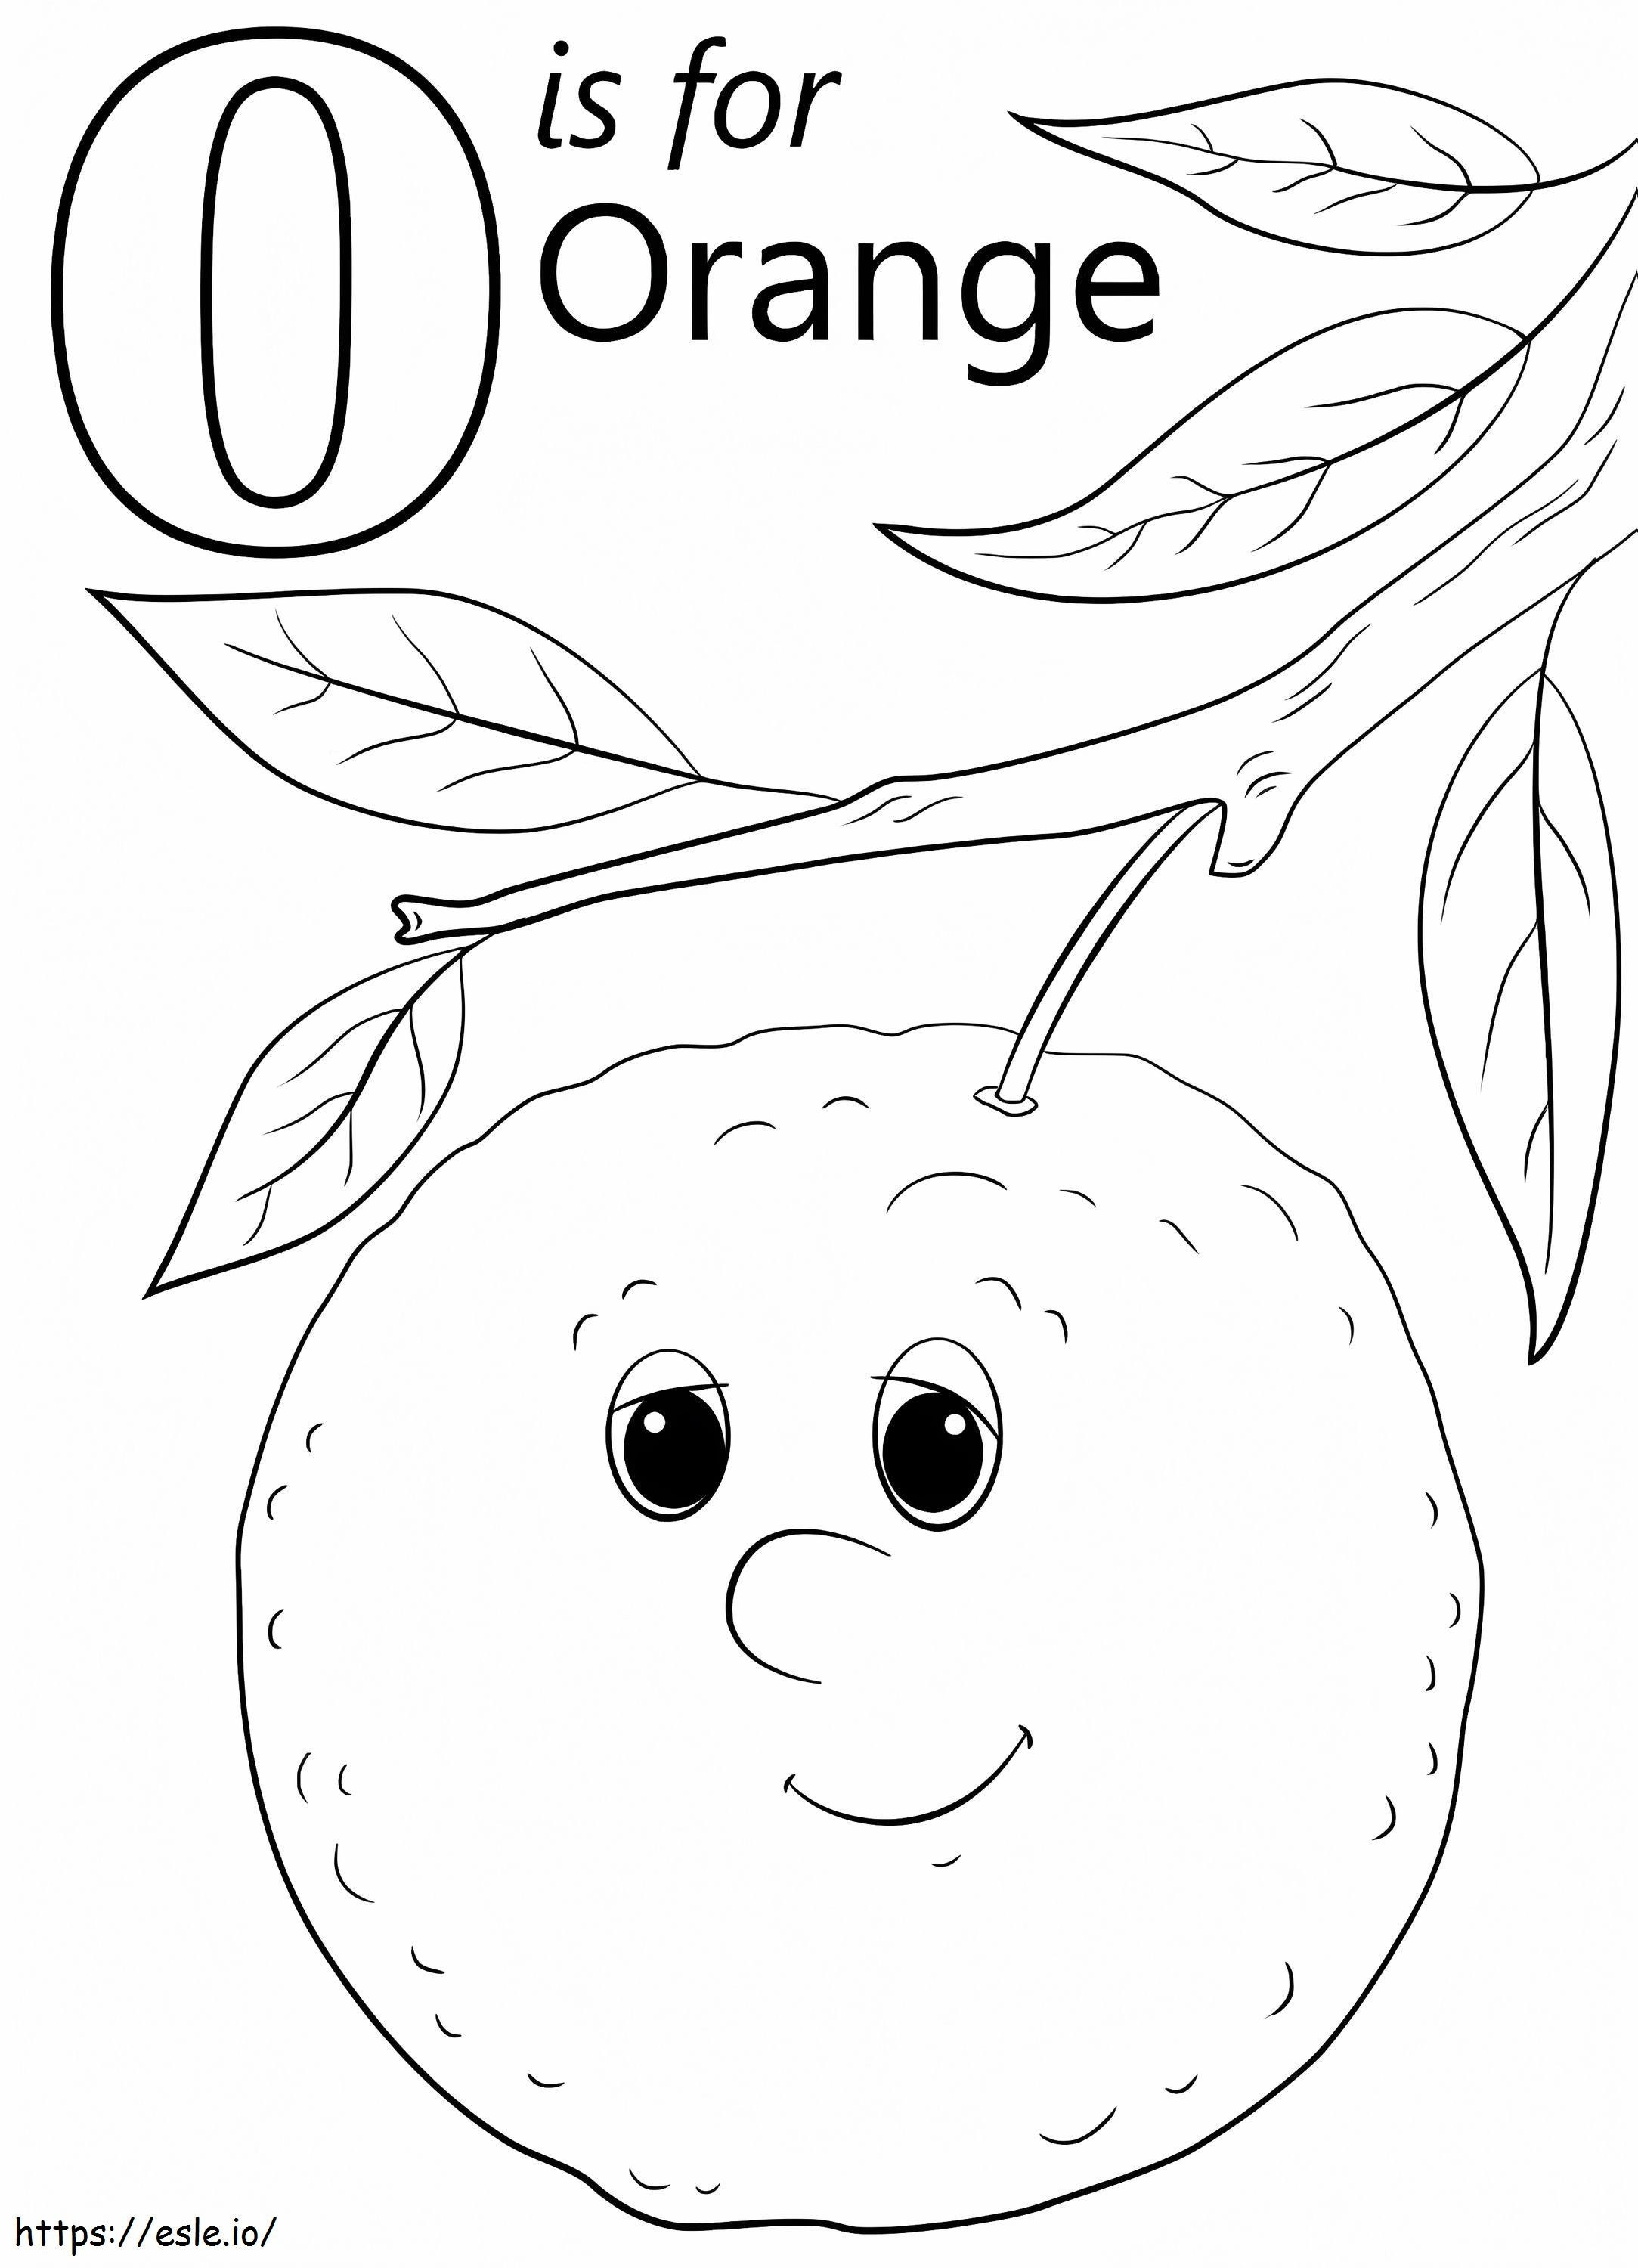 Orange Letter O coloring page